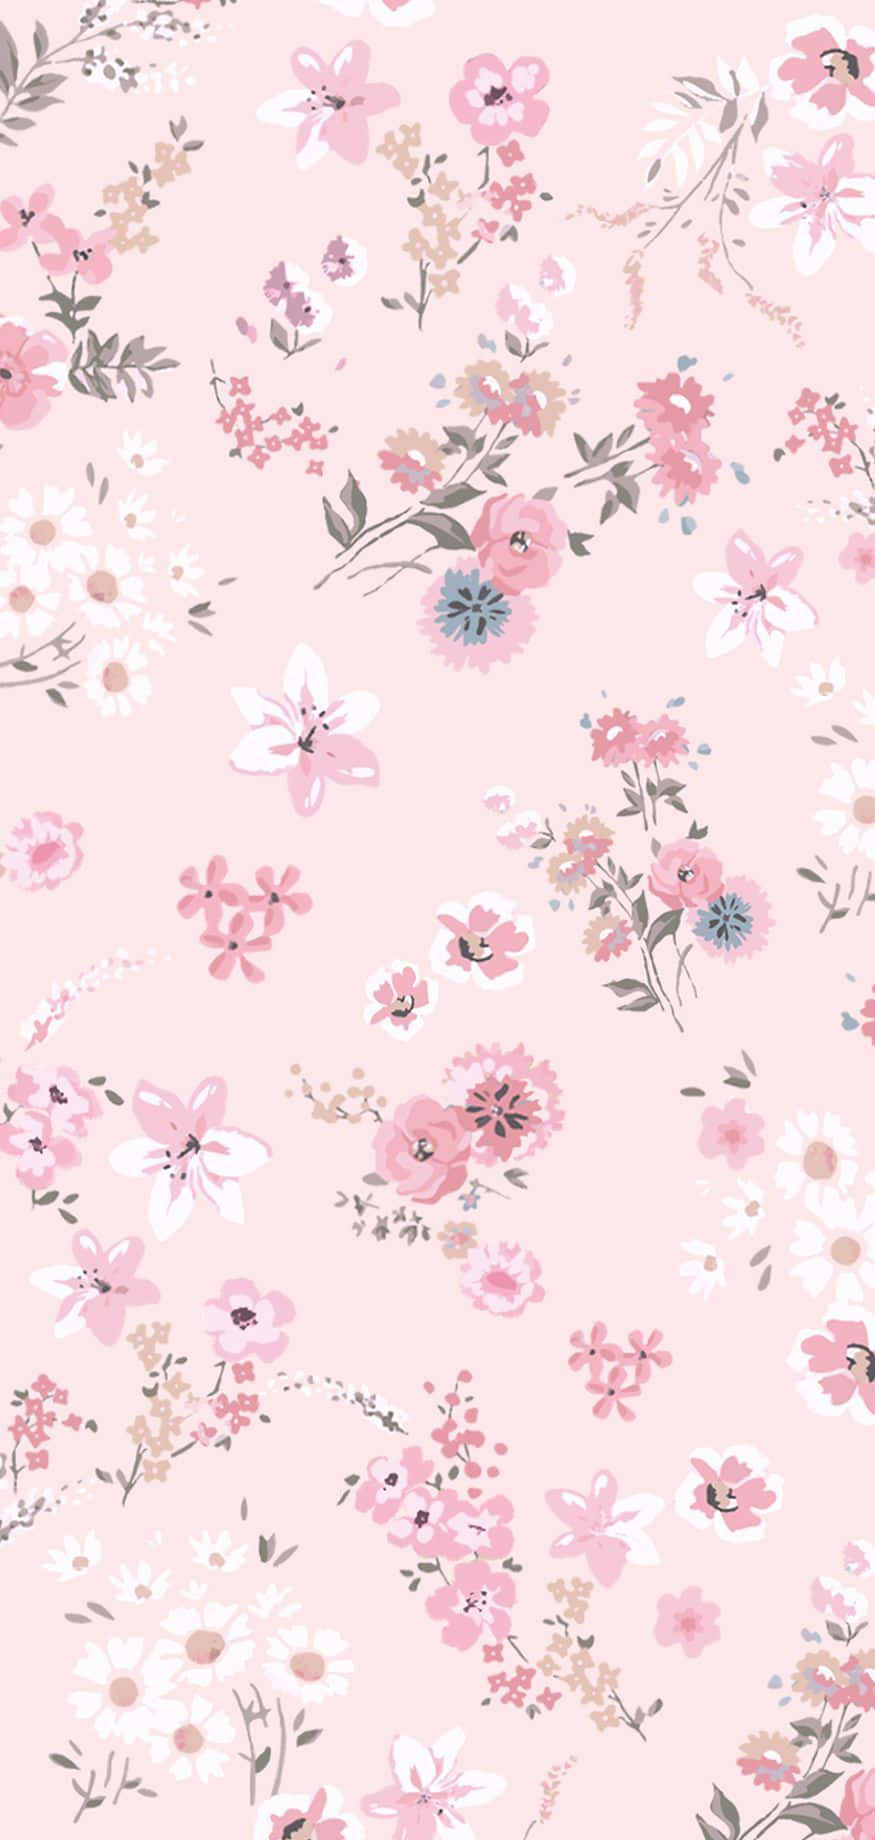 Free and customizable floral desktop wallpaper templates  Canva